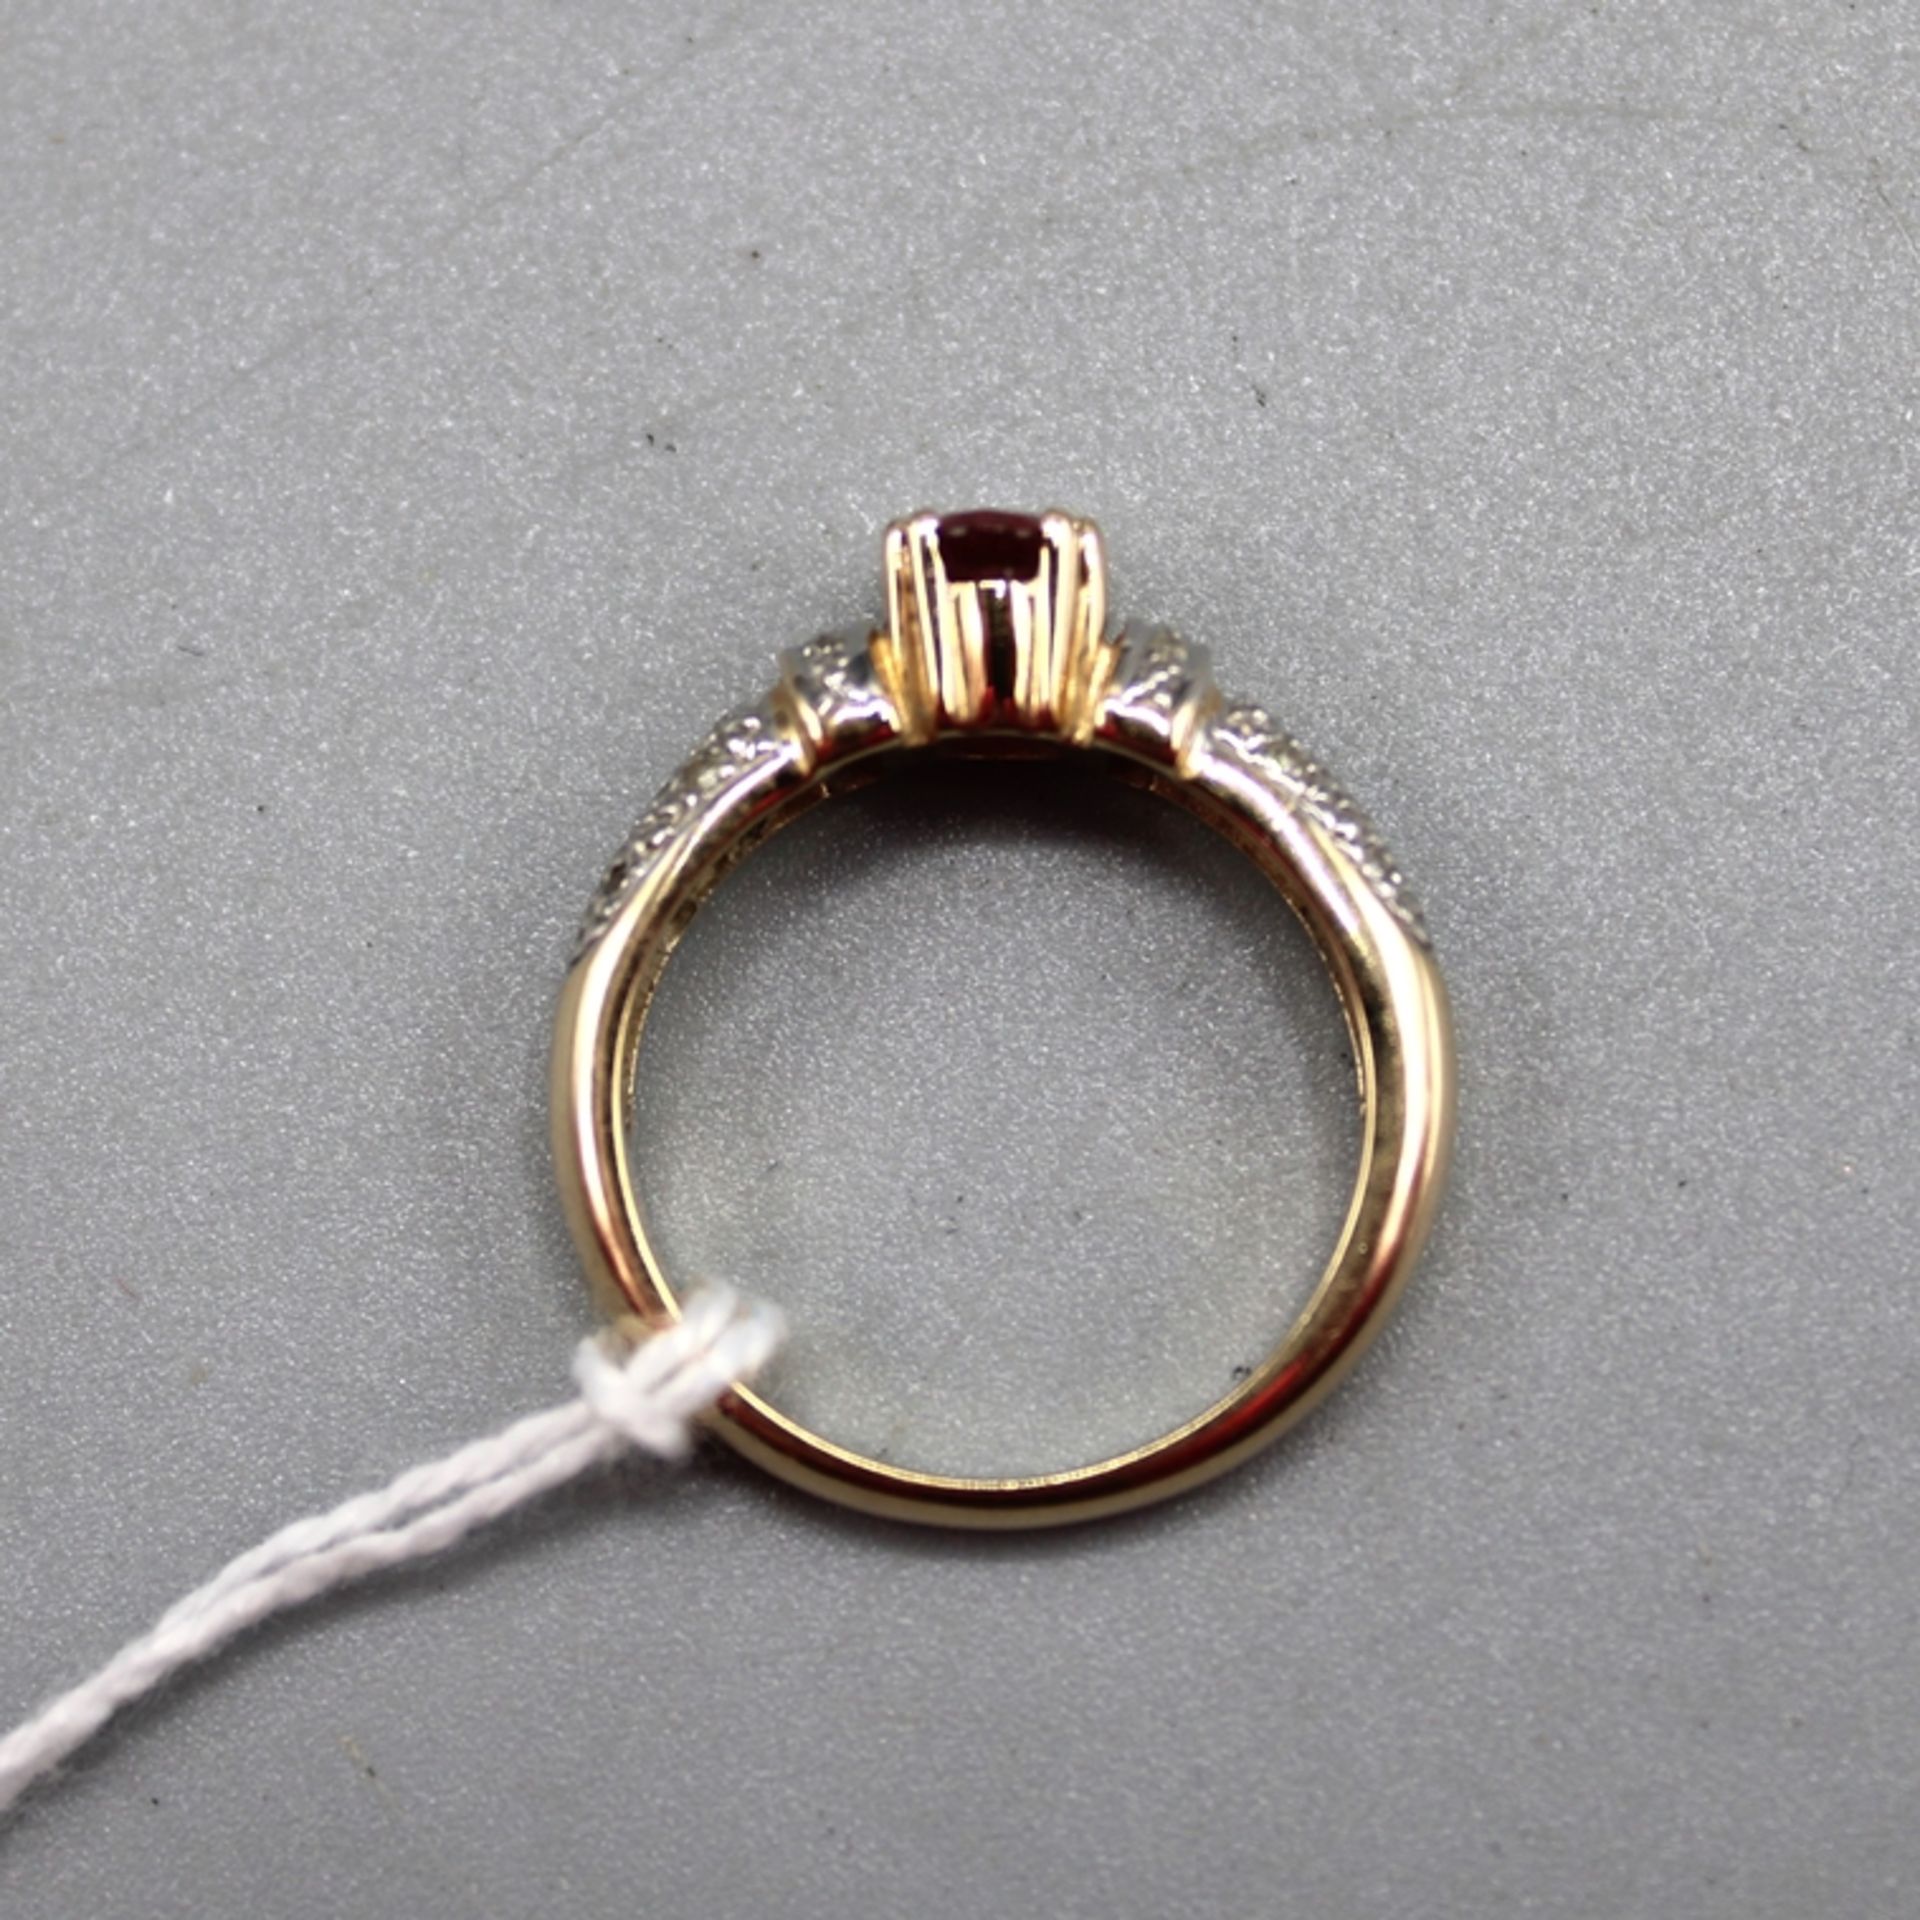 Goldring 585 m. rosa Edelstein (wohl Turmalin) u. kl. Diamanten, Ring Ø ca. 17,5 mm, 5,2 g - Image 2 of 2